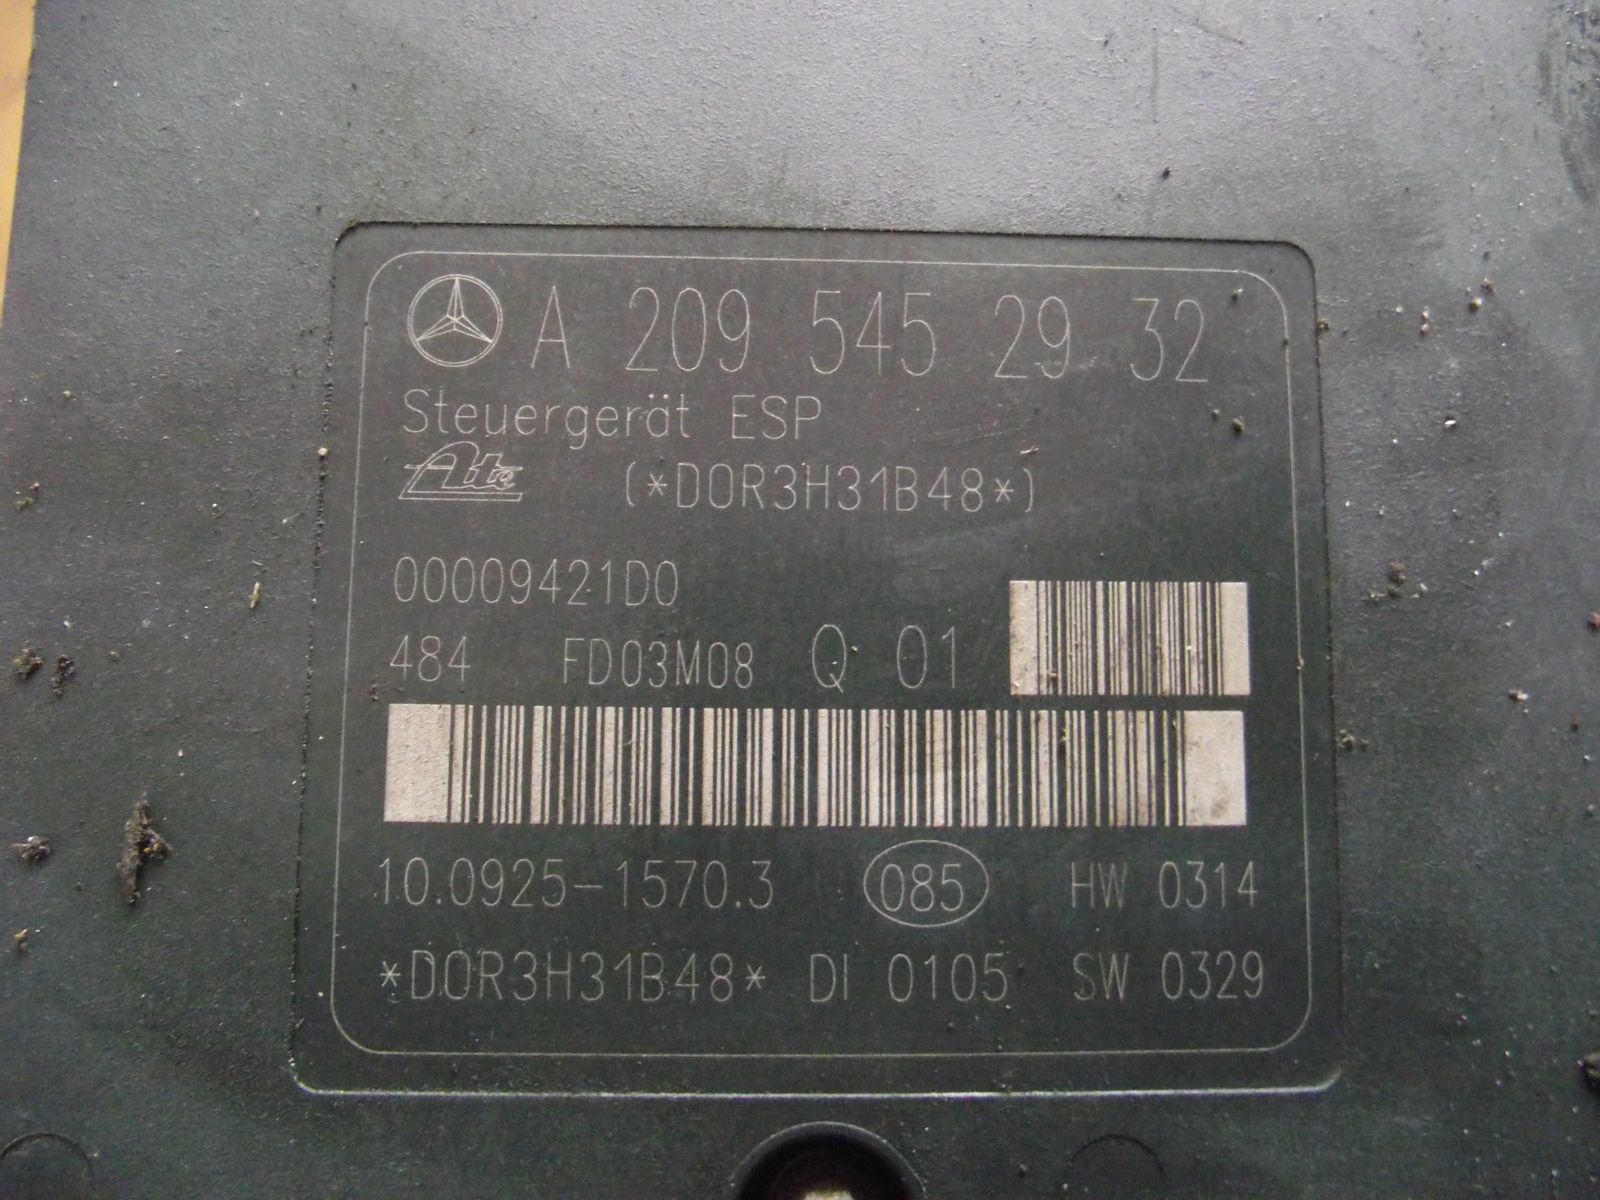 Mercedes W203 C200 CDi ABS, ESP hidraulika egység! Gera